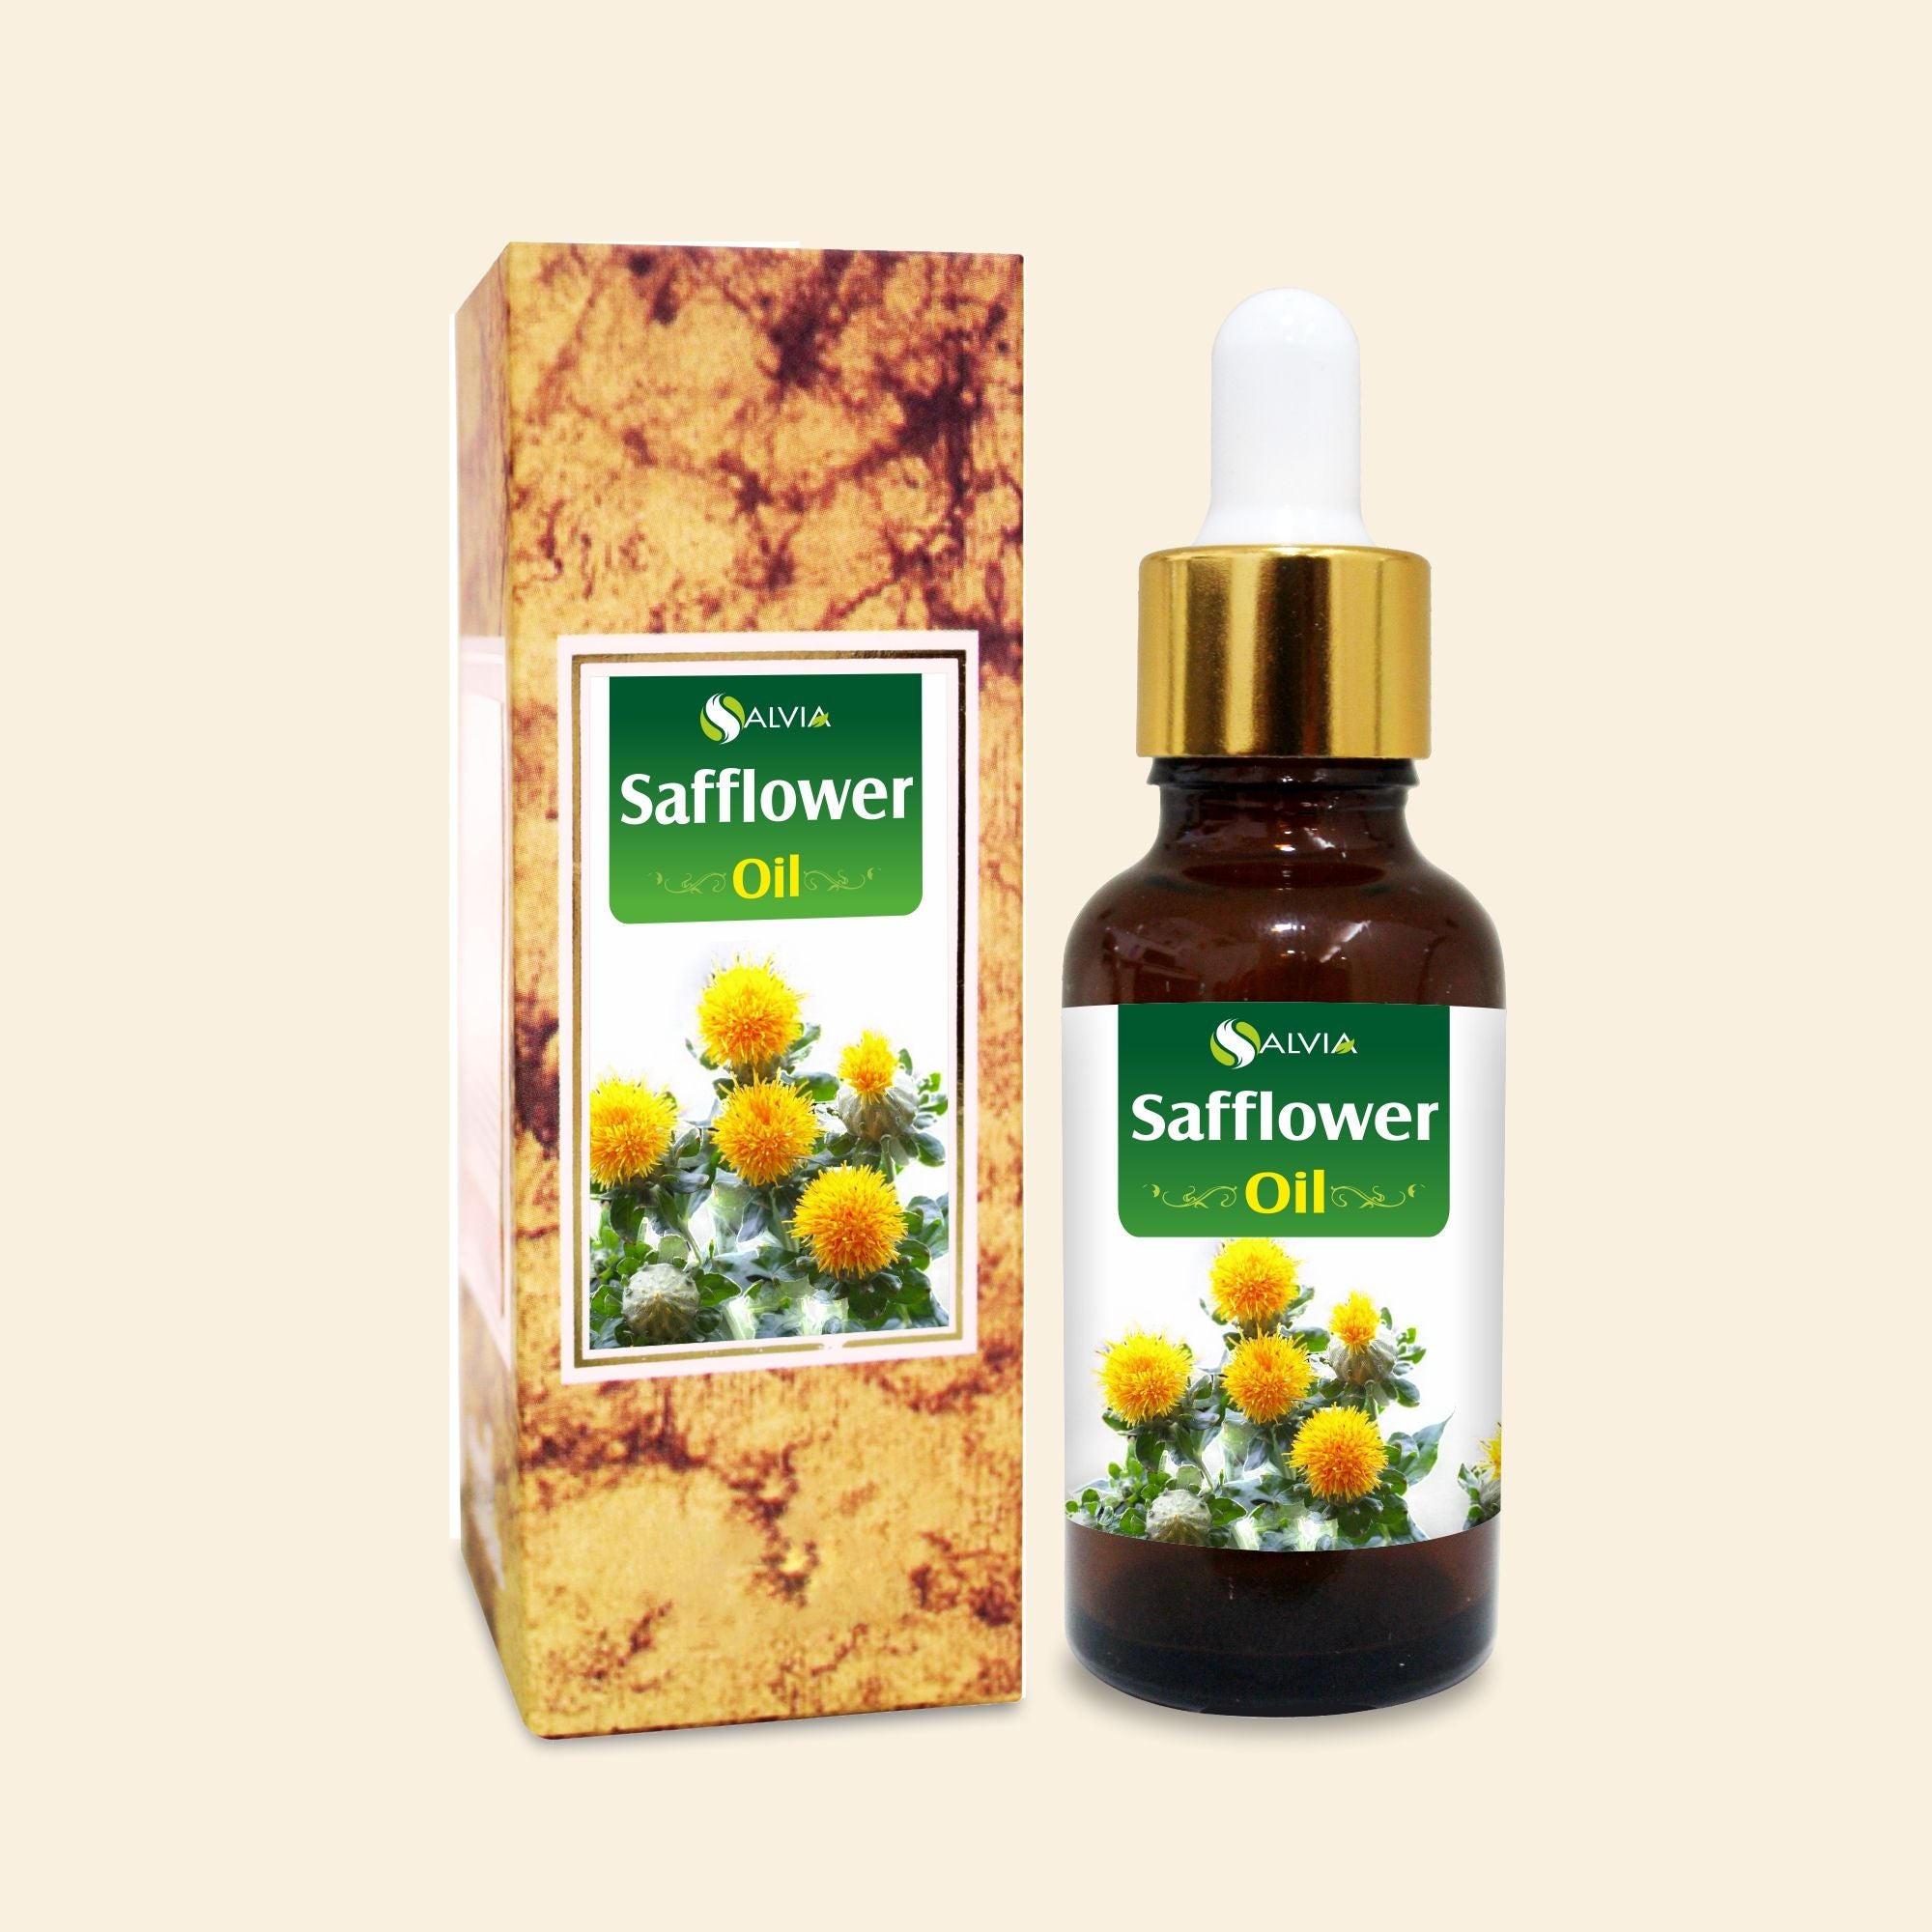 Salvia Natural Carrier Oils Safflower Oil (Cympopogan Martini) 100% Natural Pure Carrier Oil